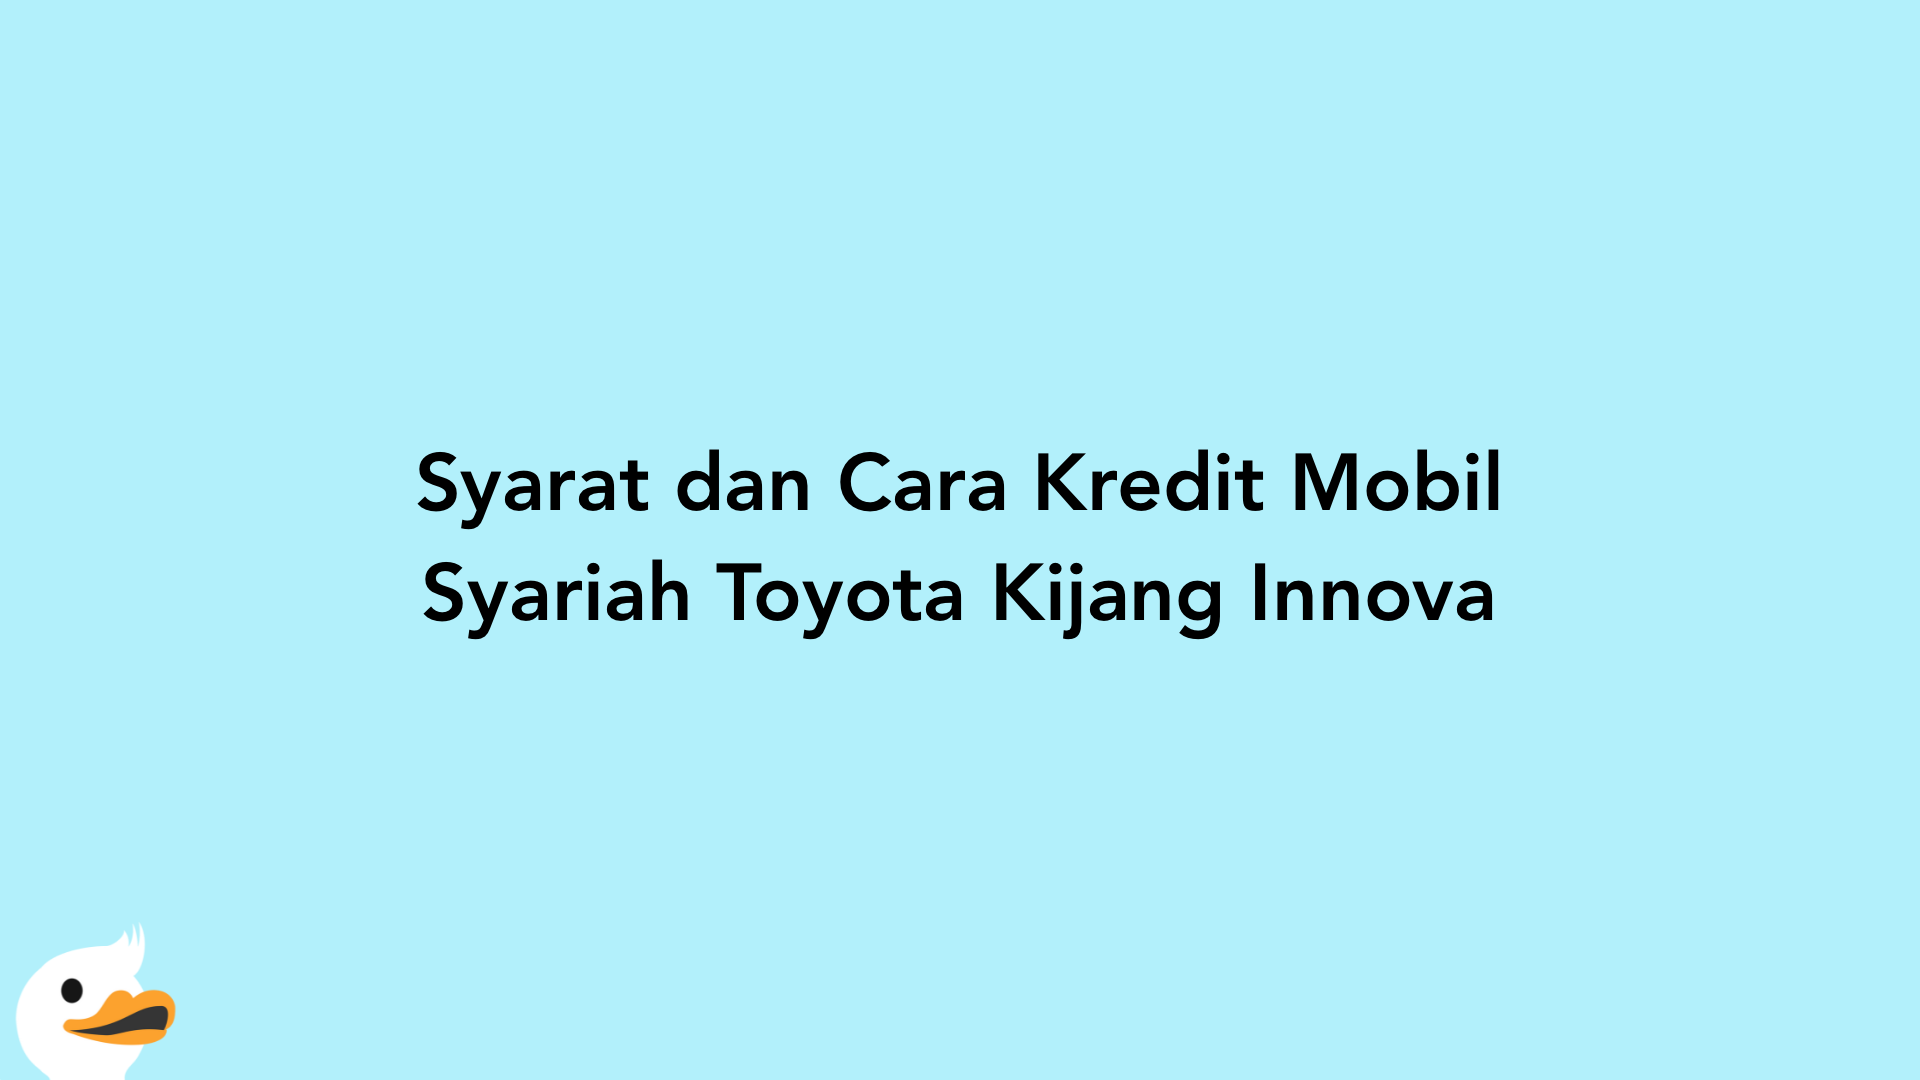 Syarat dan Cara Kredit Mobil Syariah Toyota Kijang Innova